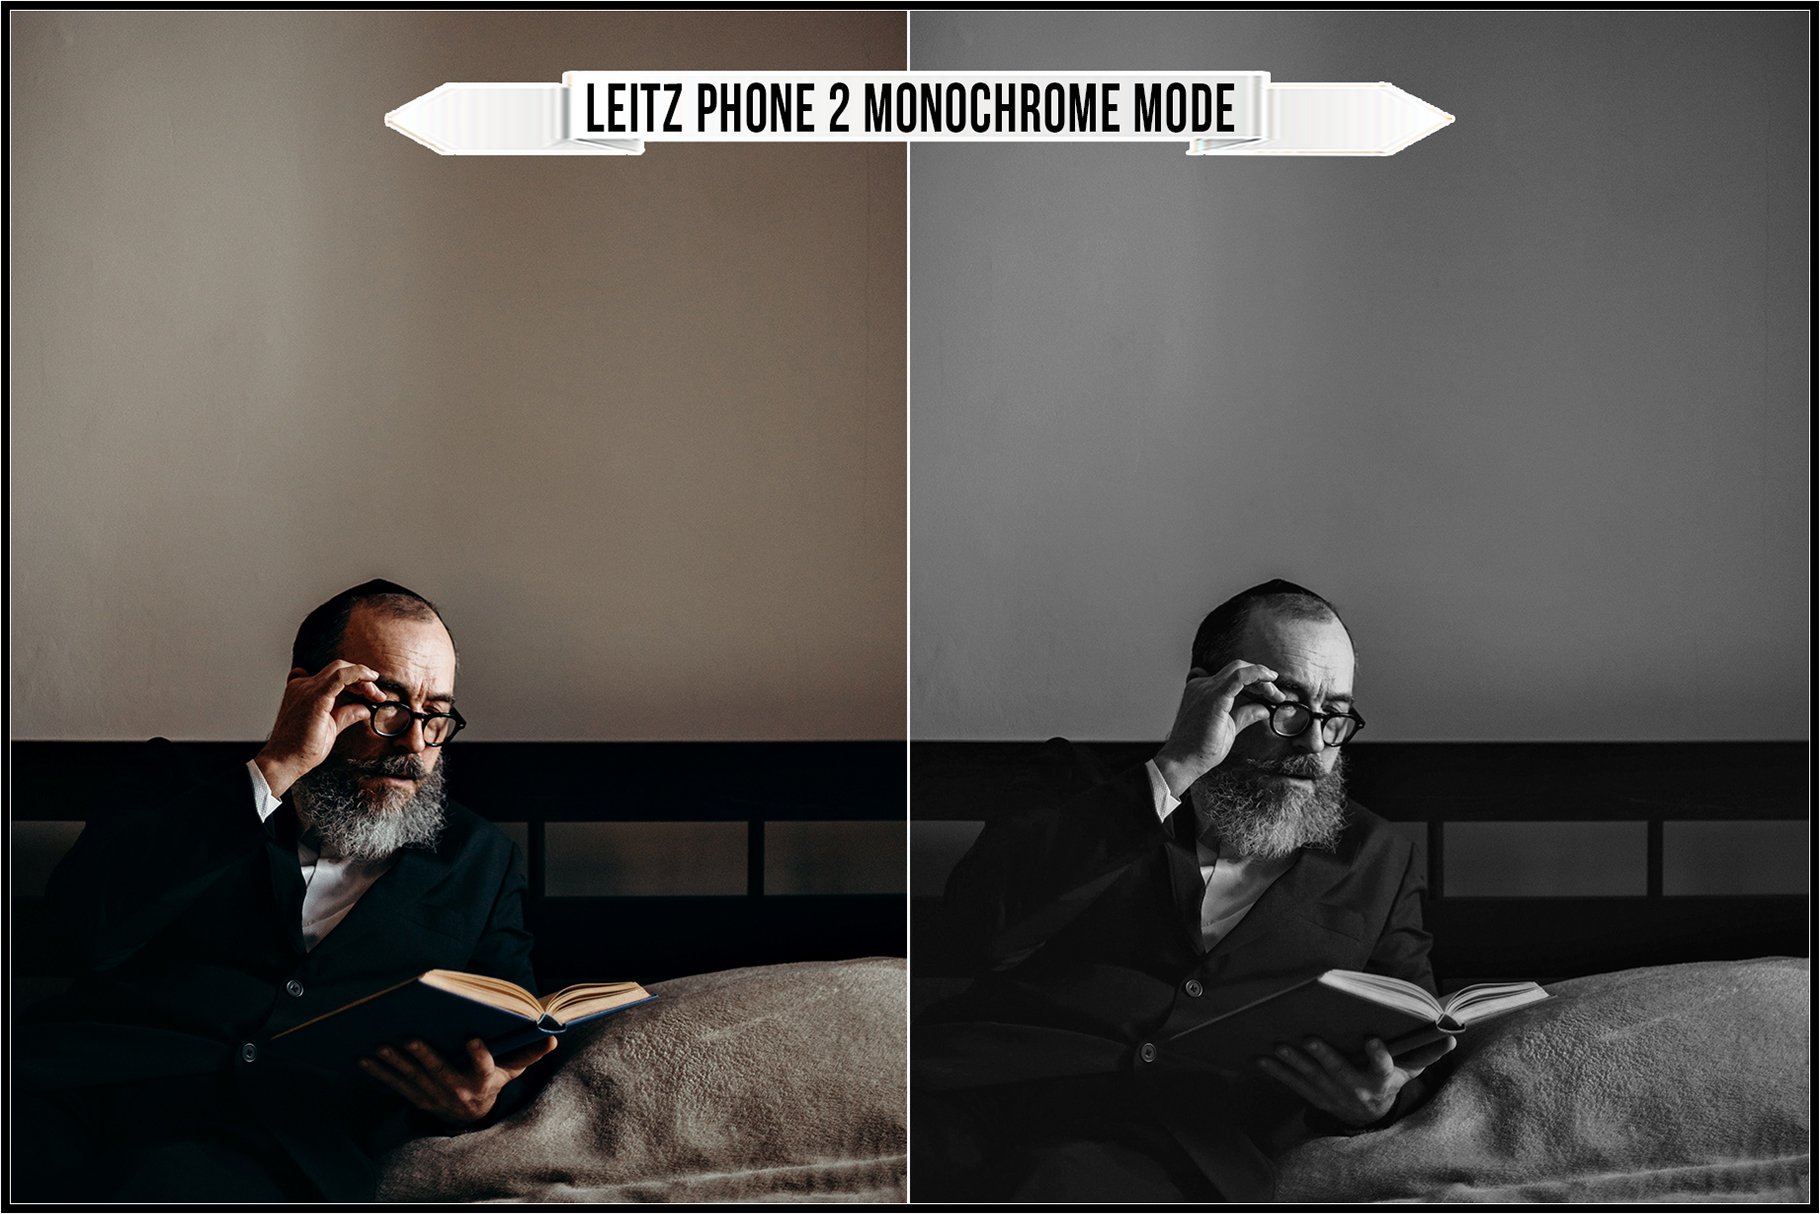 leitz phone 2 monochrome mode 837